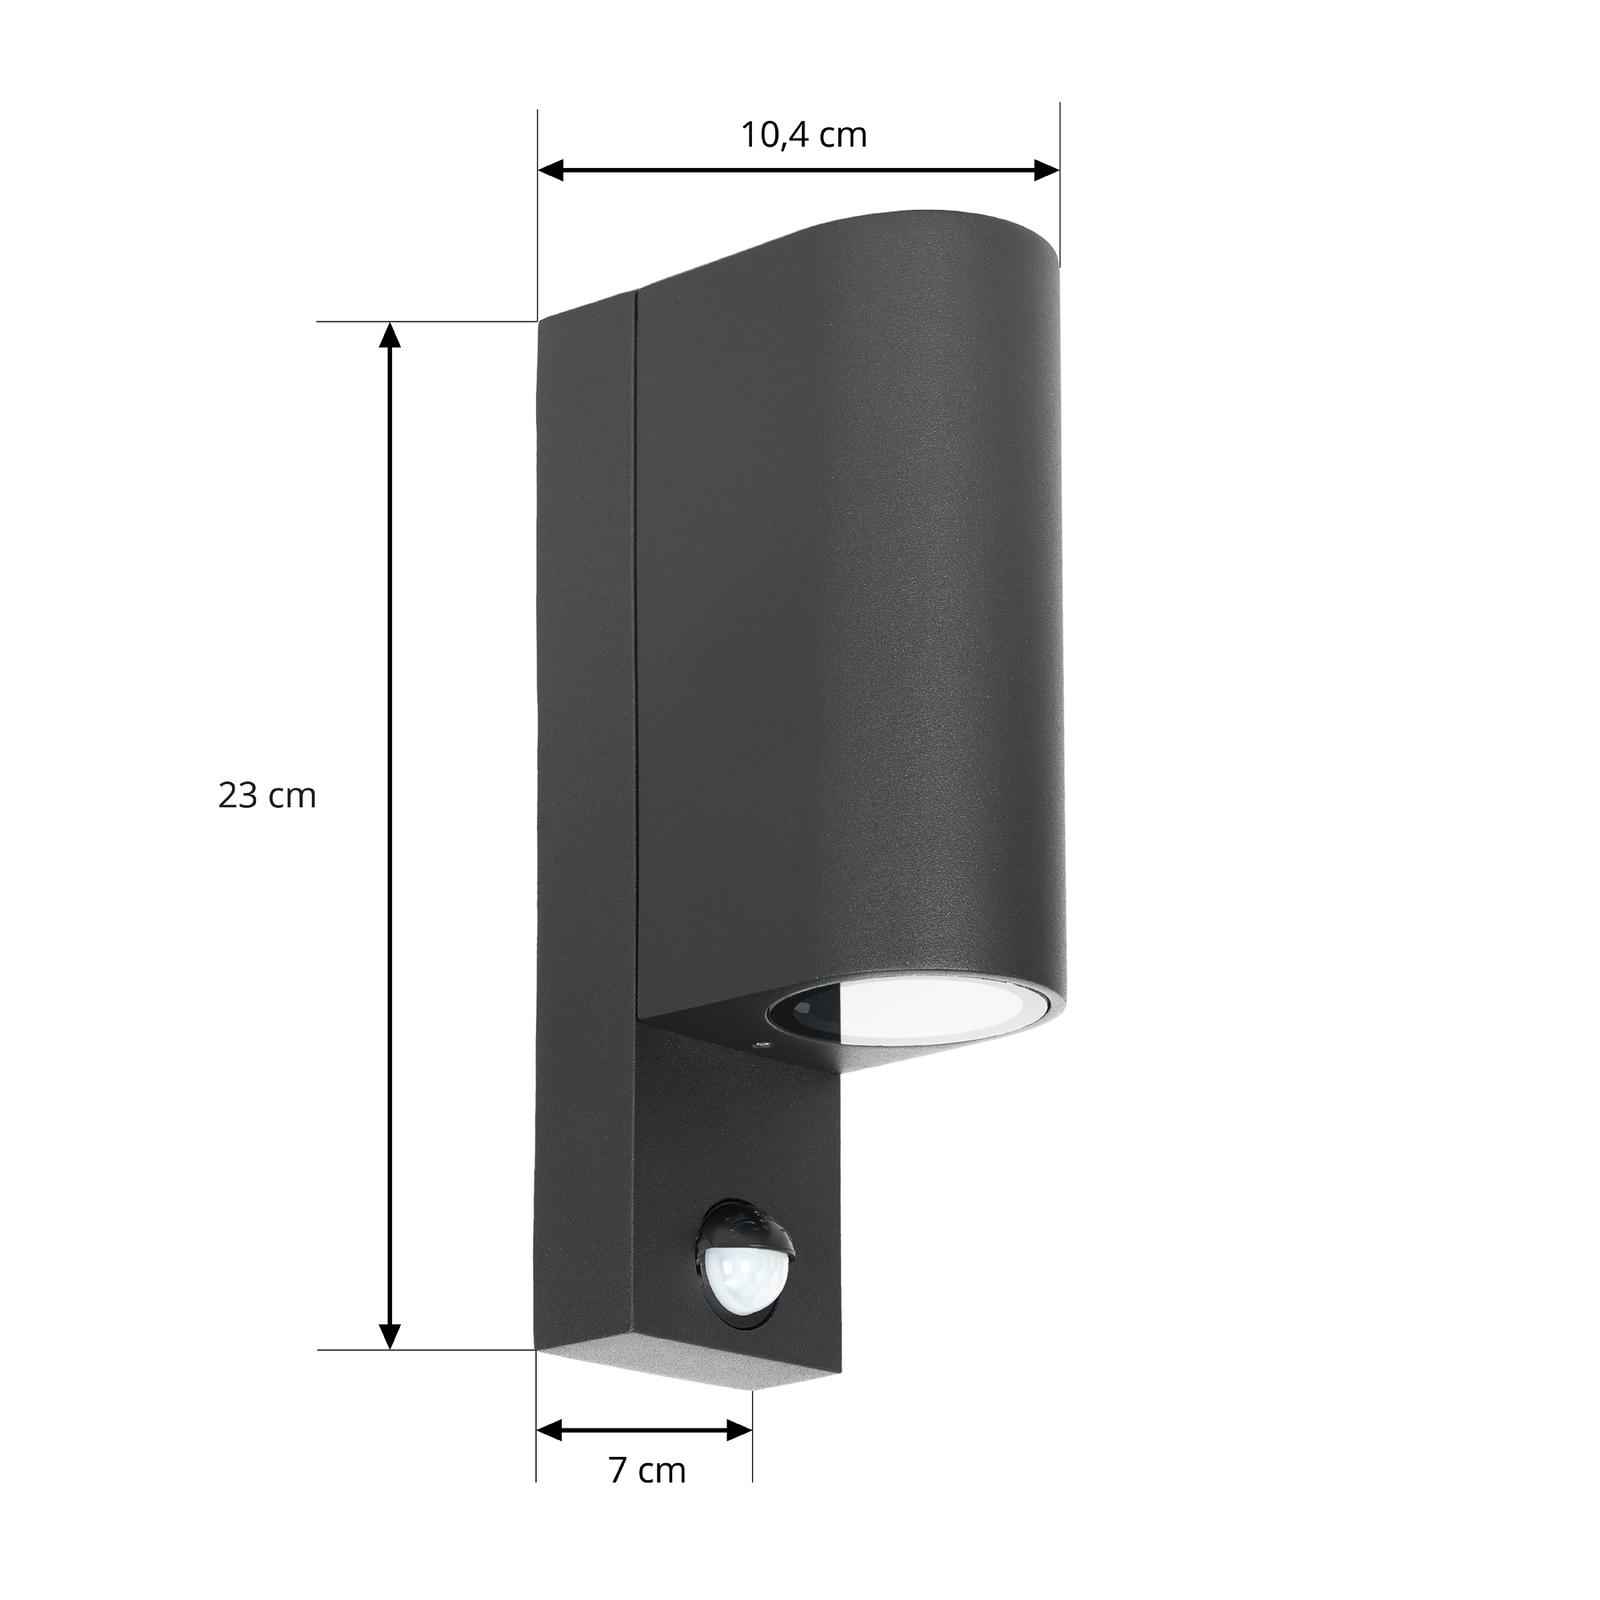 Prios outdoor wall light Tetje, black, round, sensor, set of 2